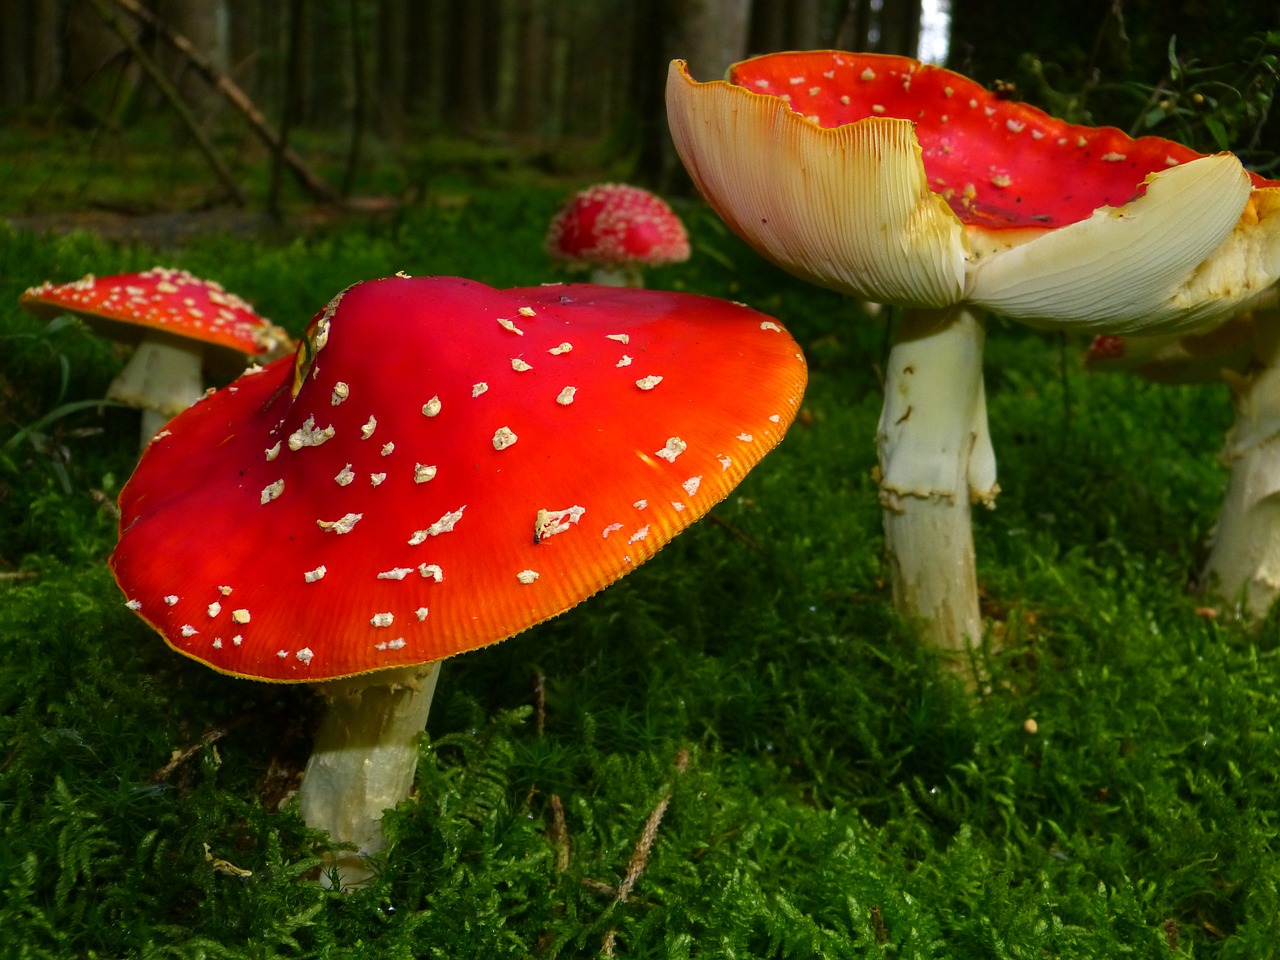 Enjoy the Fungi Season and Help the Science!